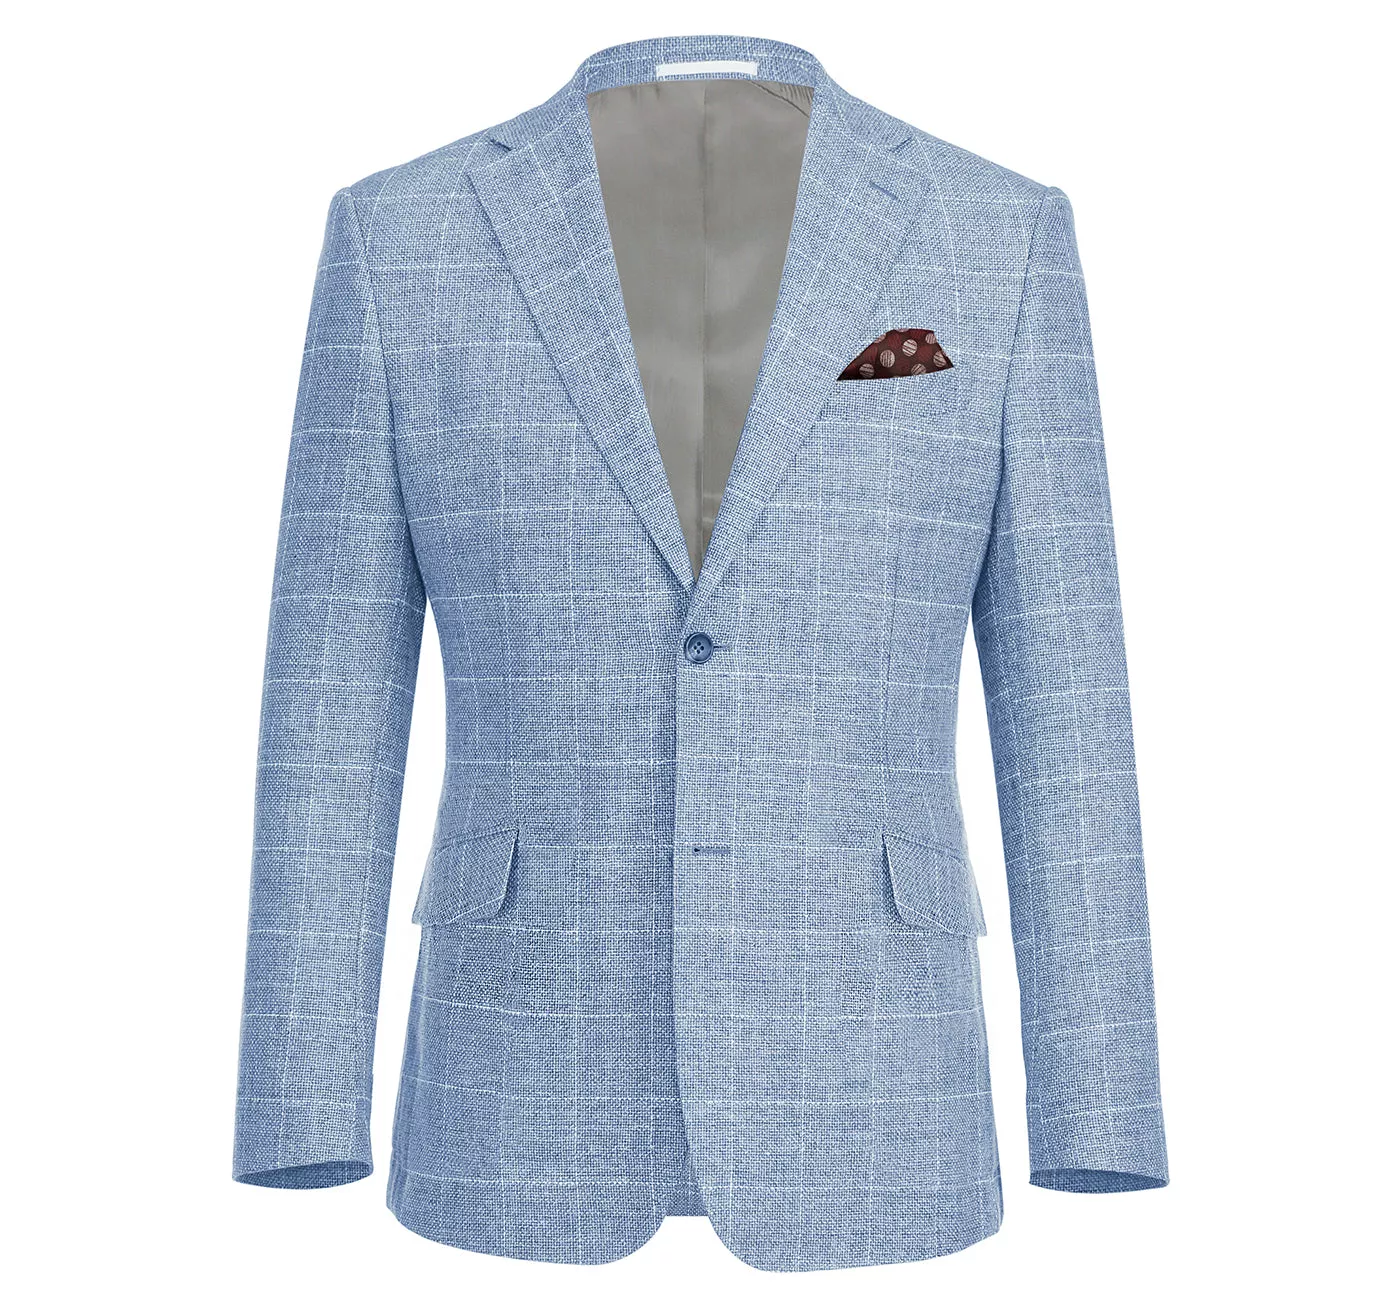 Men's Slim Fit Blazer Cotton and Linen-Blend Summer Sport Coat